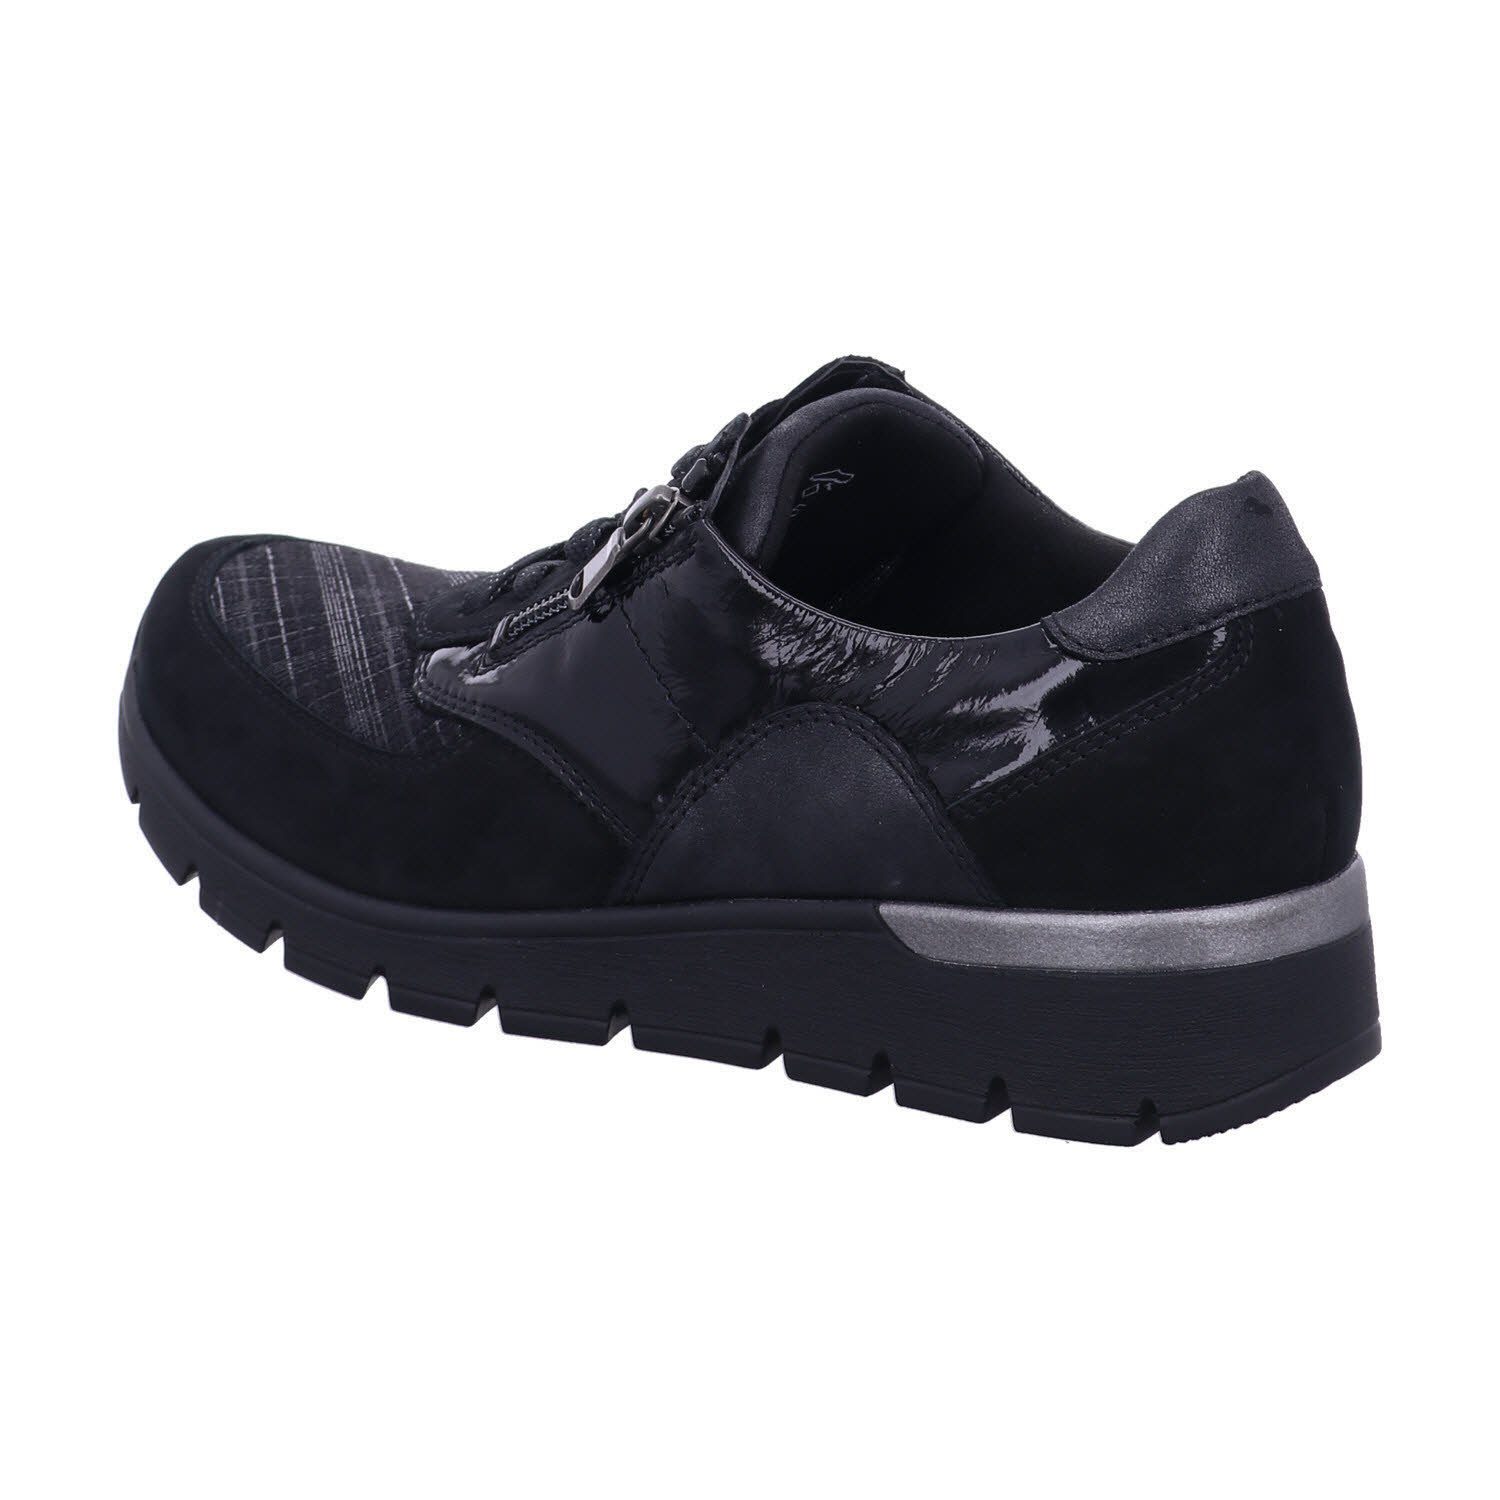 schwarz-kombiniert-schwarz-kombiniert Sneaker Waldläufer